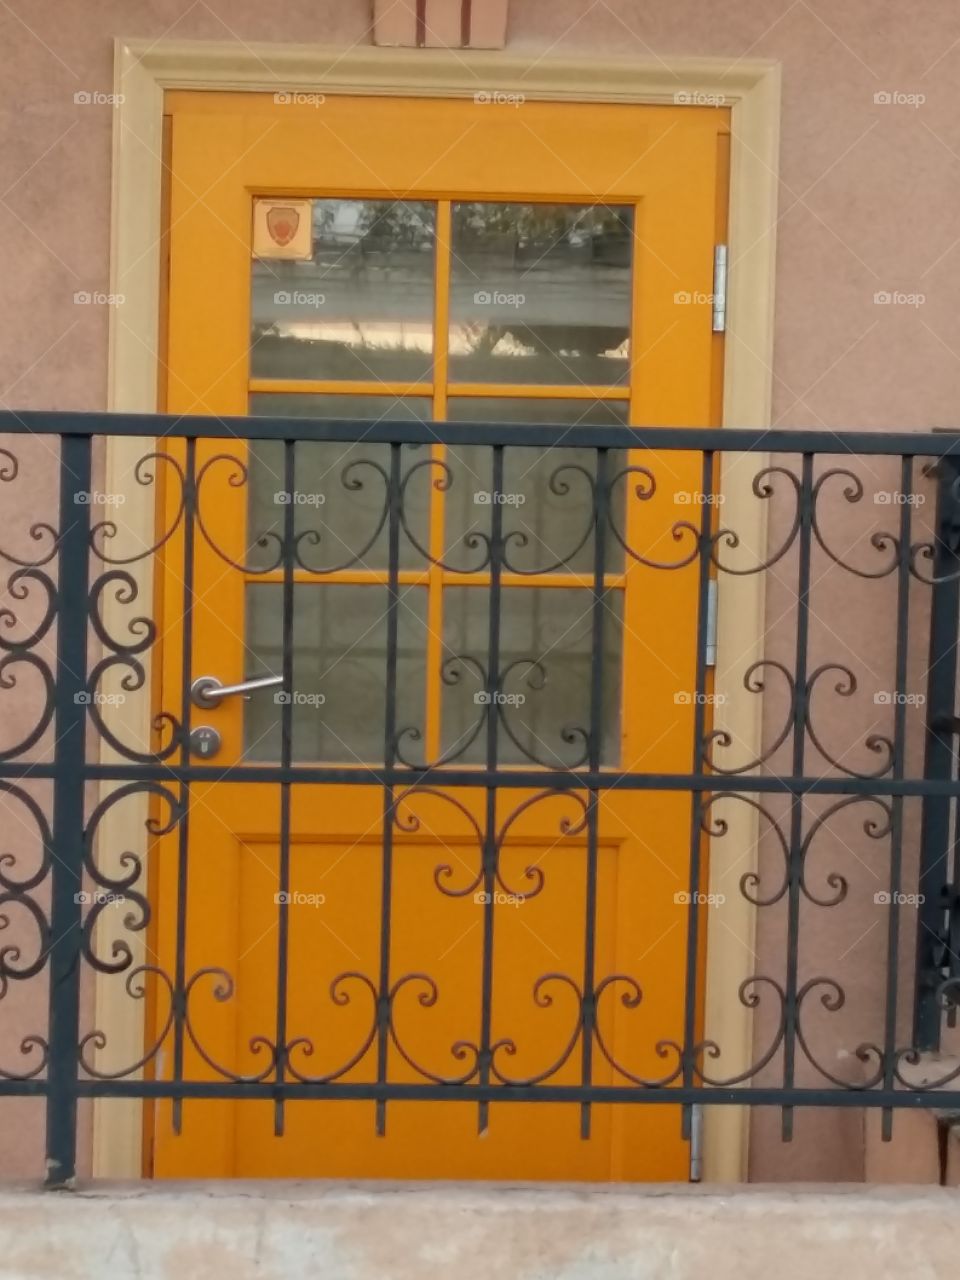 Yellow door in the city with railings